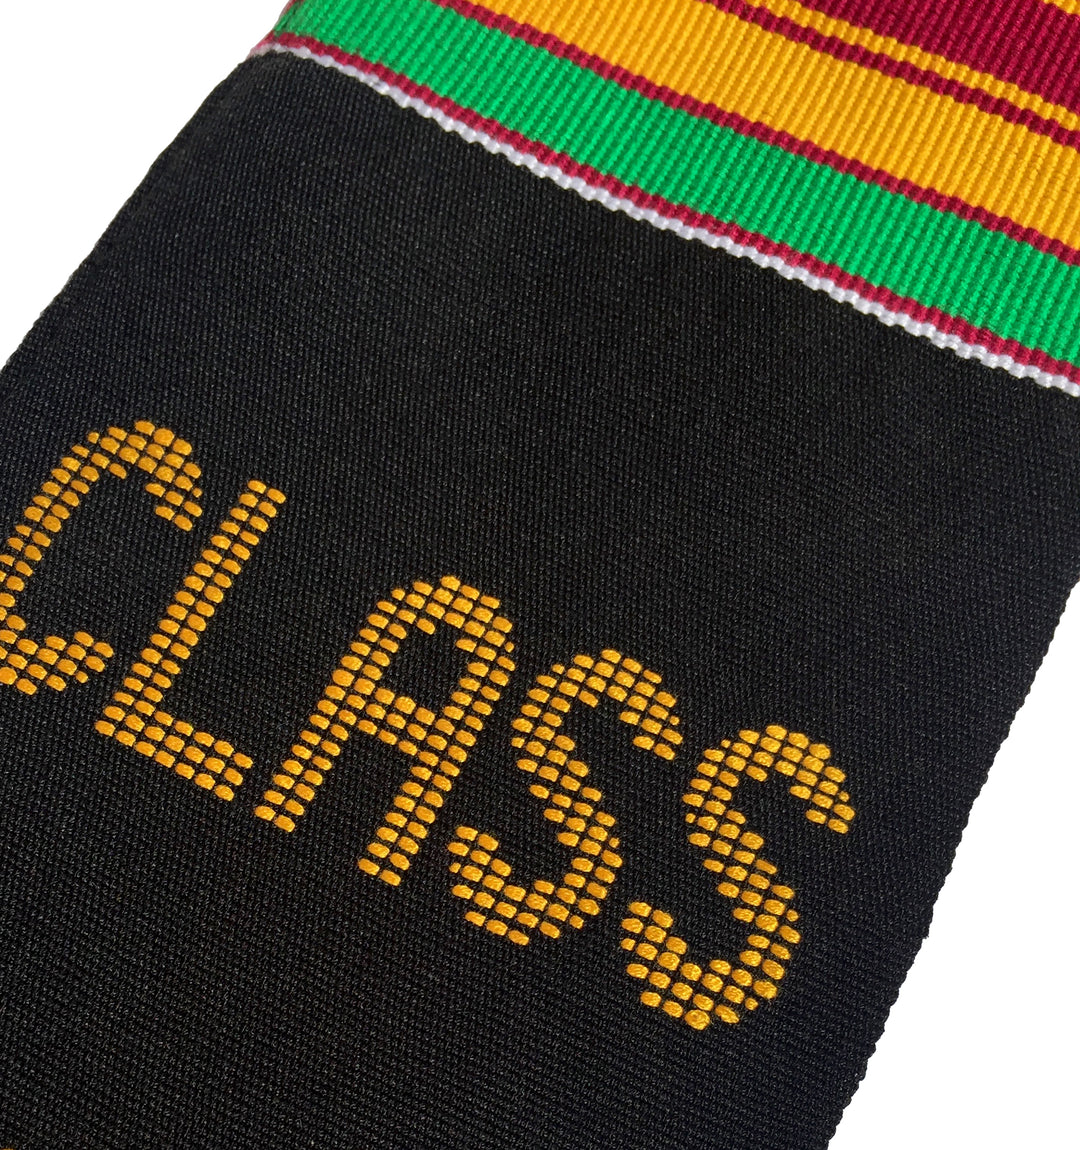 Black Girl Magic Class of 2024 Authentic Handwoven Kente Cloth Graduation Stole